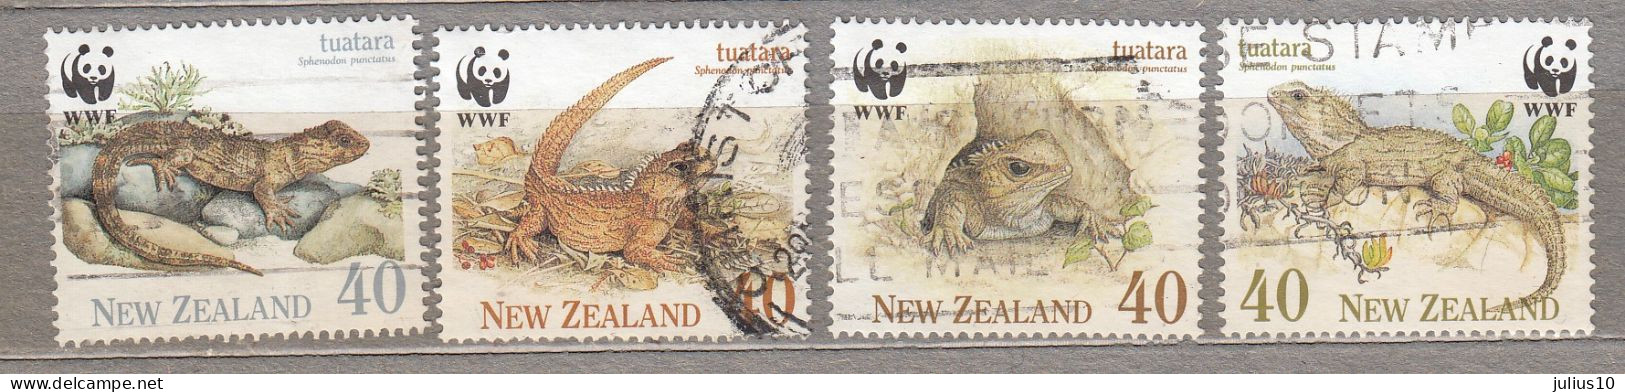 NEW ZEALAND 1991 WWF Reptiles Used(o) Mi 1160-1163   #34168 - Oblitérés